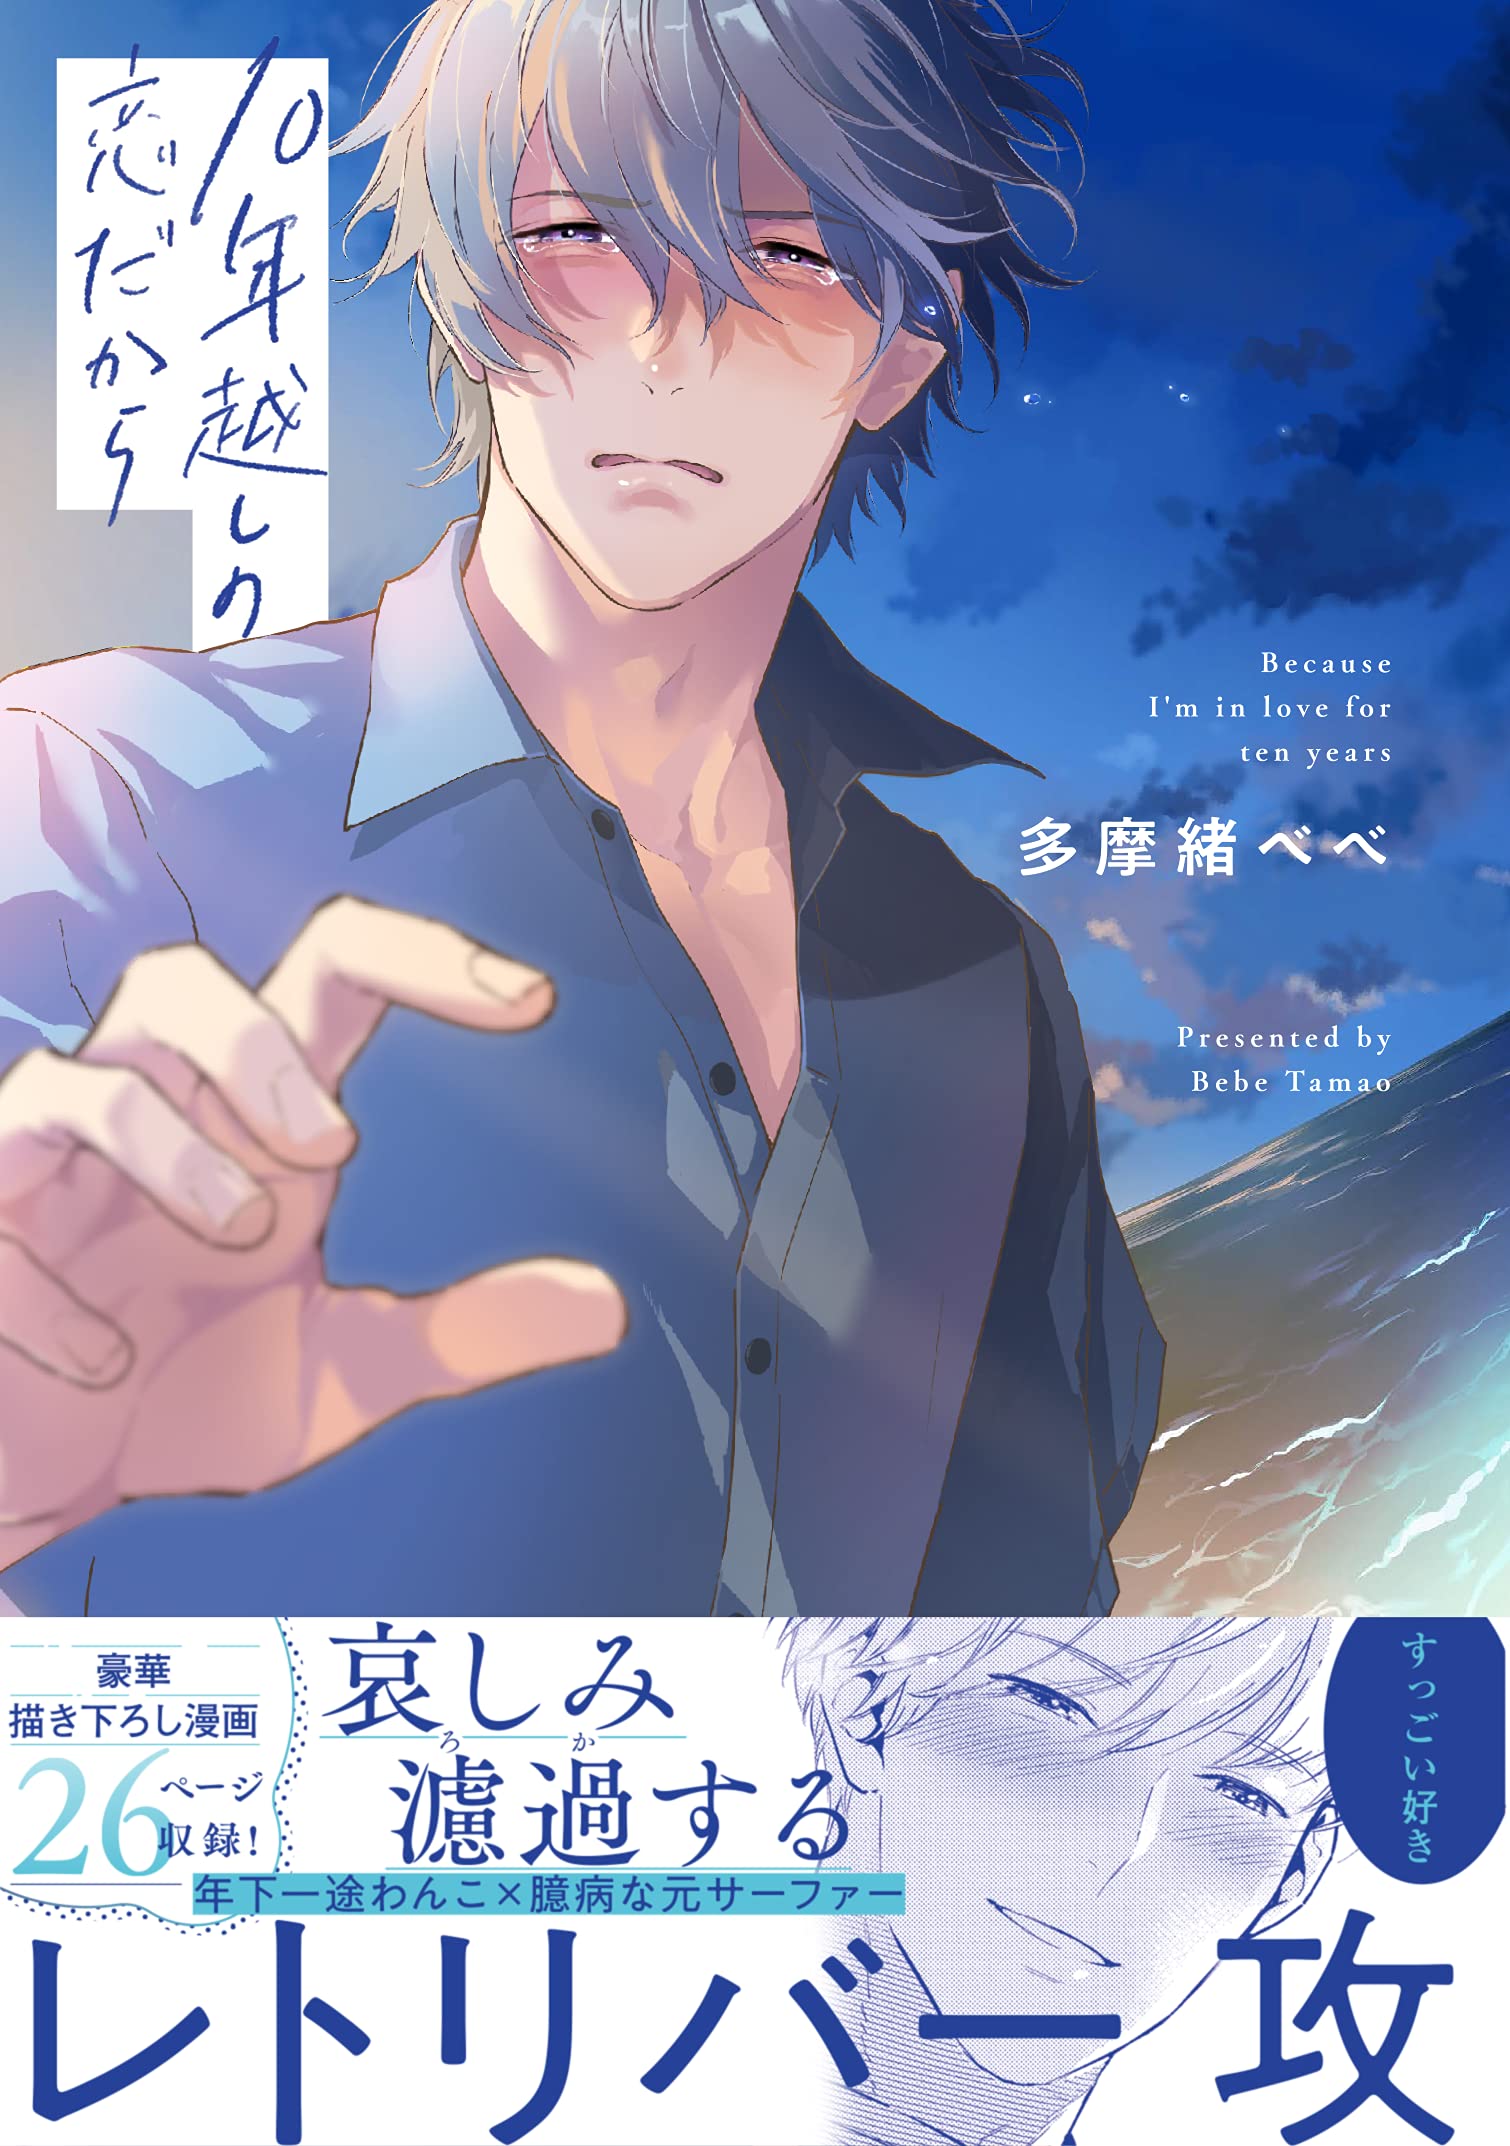 Boys Love (Yaoi) Comics - 10 Nengoshi no Koi dakara (Because I'm in Love for Ten Years) (10年越しの恋だから (DAISY COMICS)) / Tamao Bebe